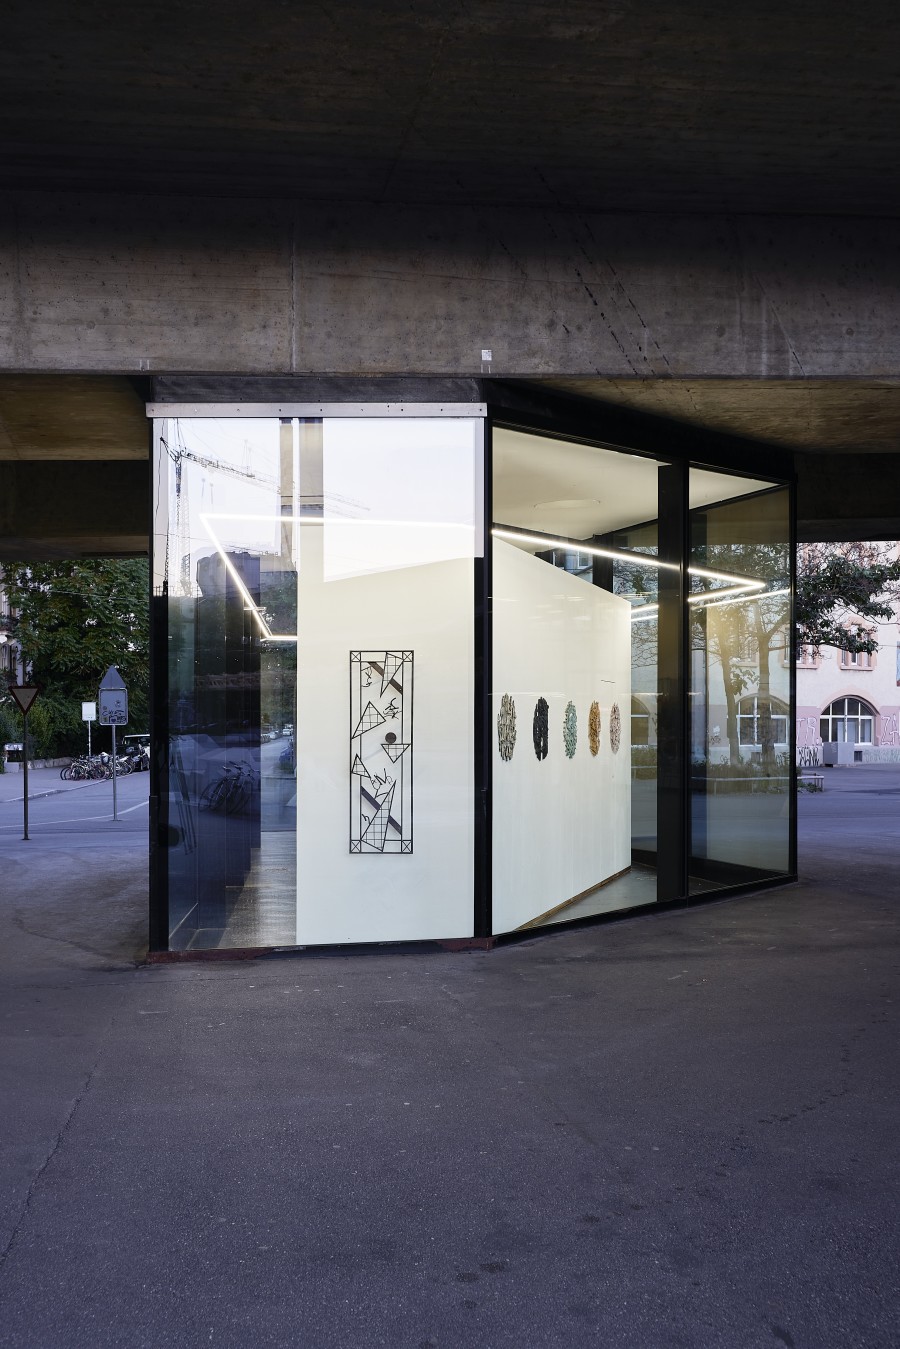 Martin Chramosta, ICH DIEN, 2022. Installation View. VITRINE Basel. Photographer: Moritz Schermbach. Courtesy the artist and VITRINE